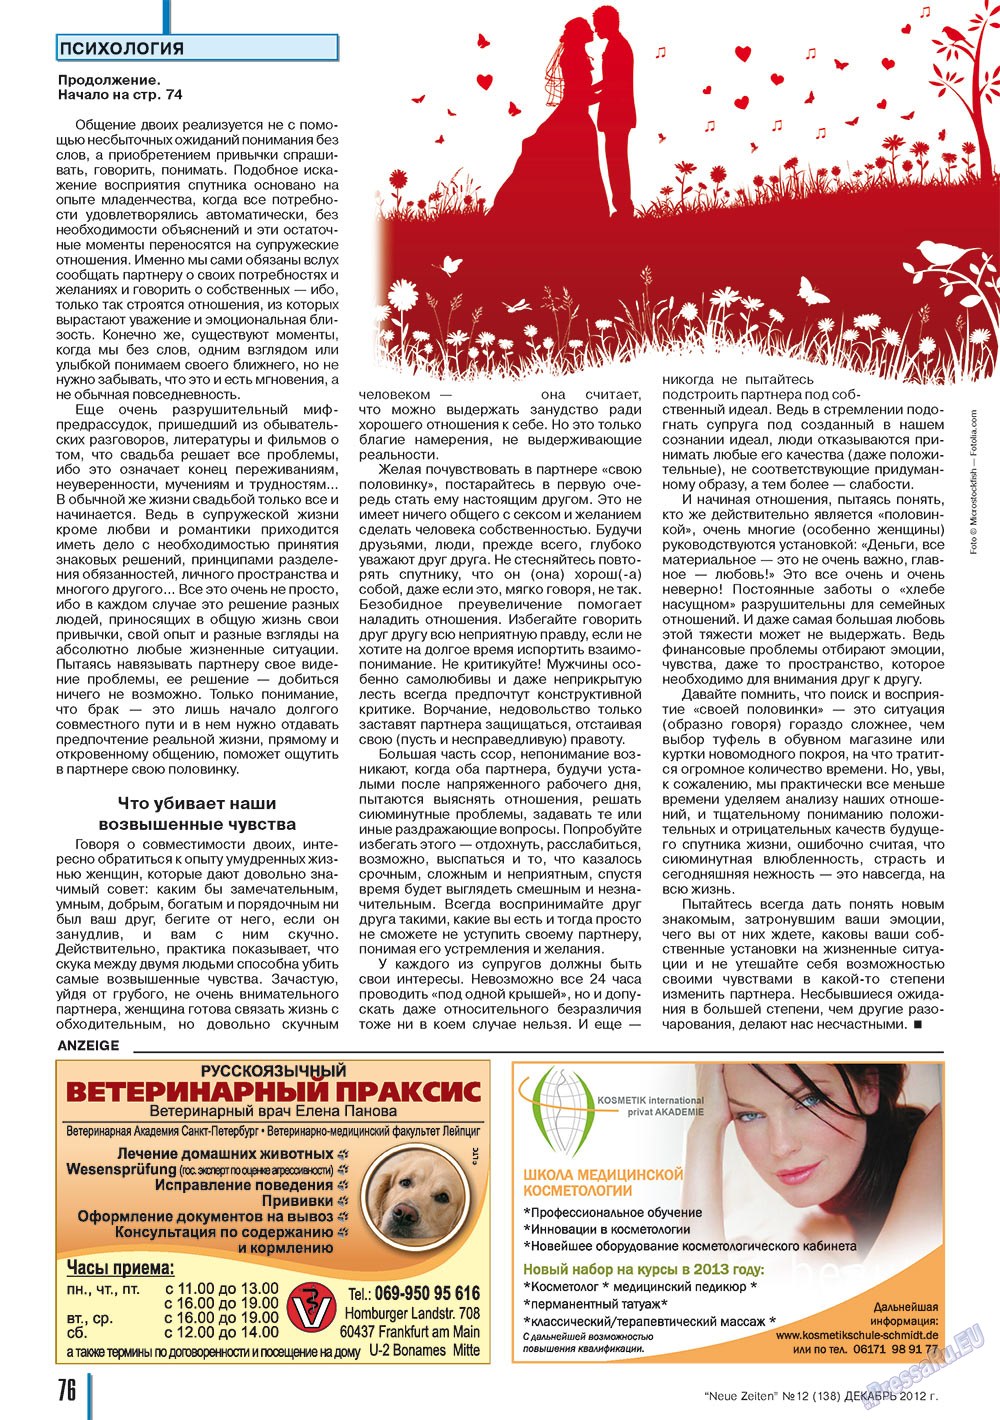 Neue Zeiten (журнал). 2012 год, номер 12, стр. 76